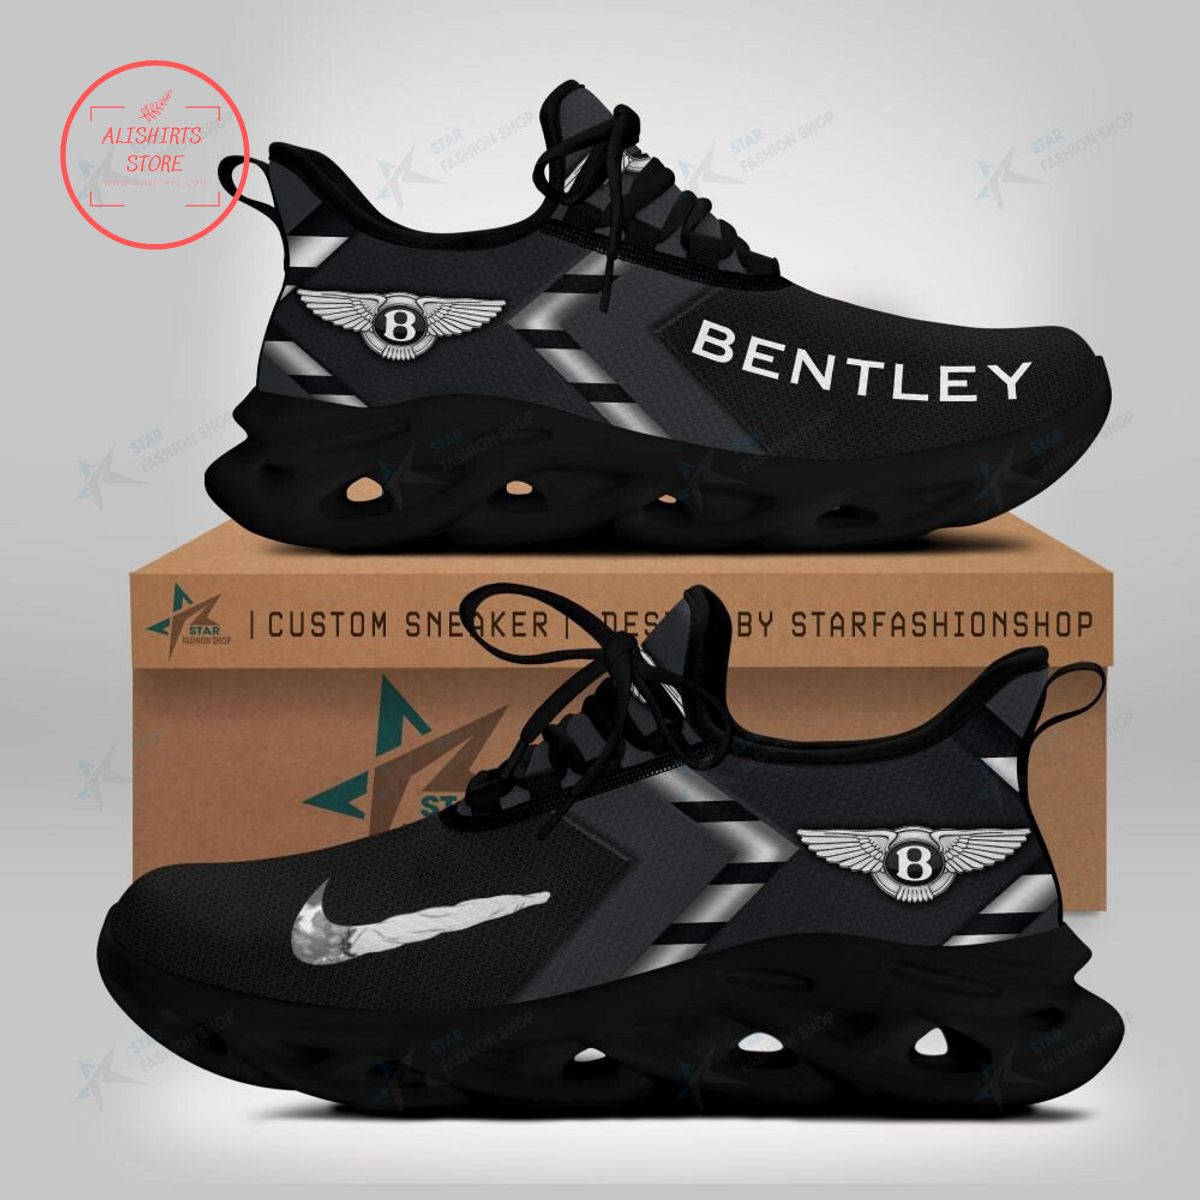 Bentley Max Soul Sneaker Shoes